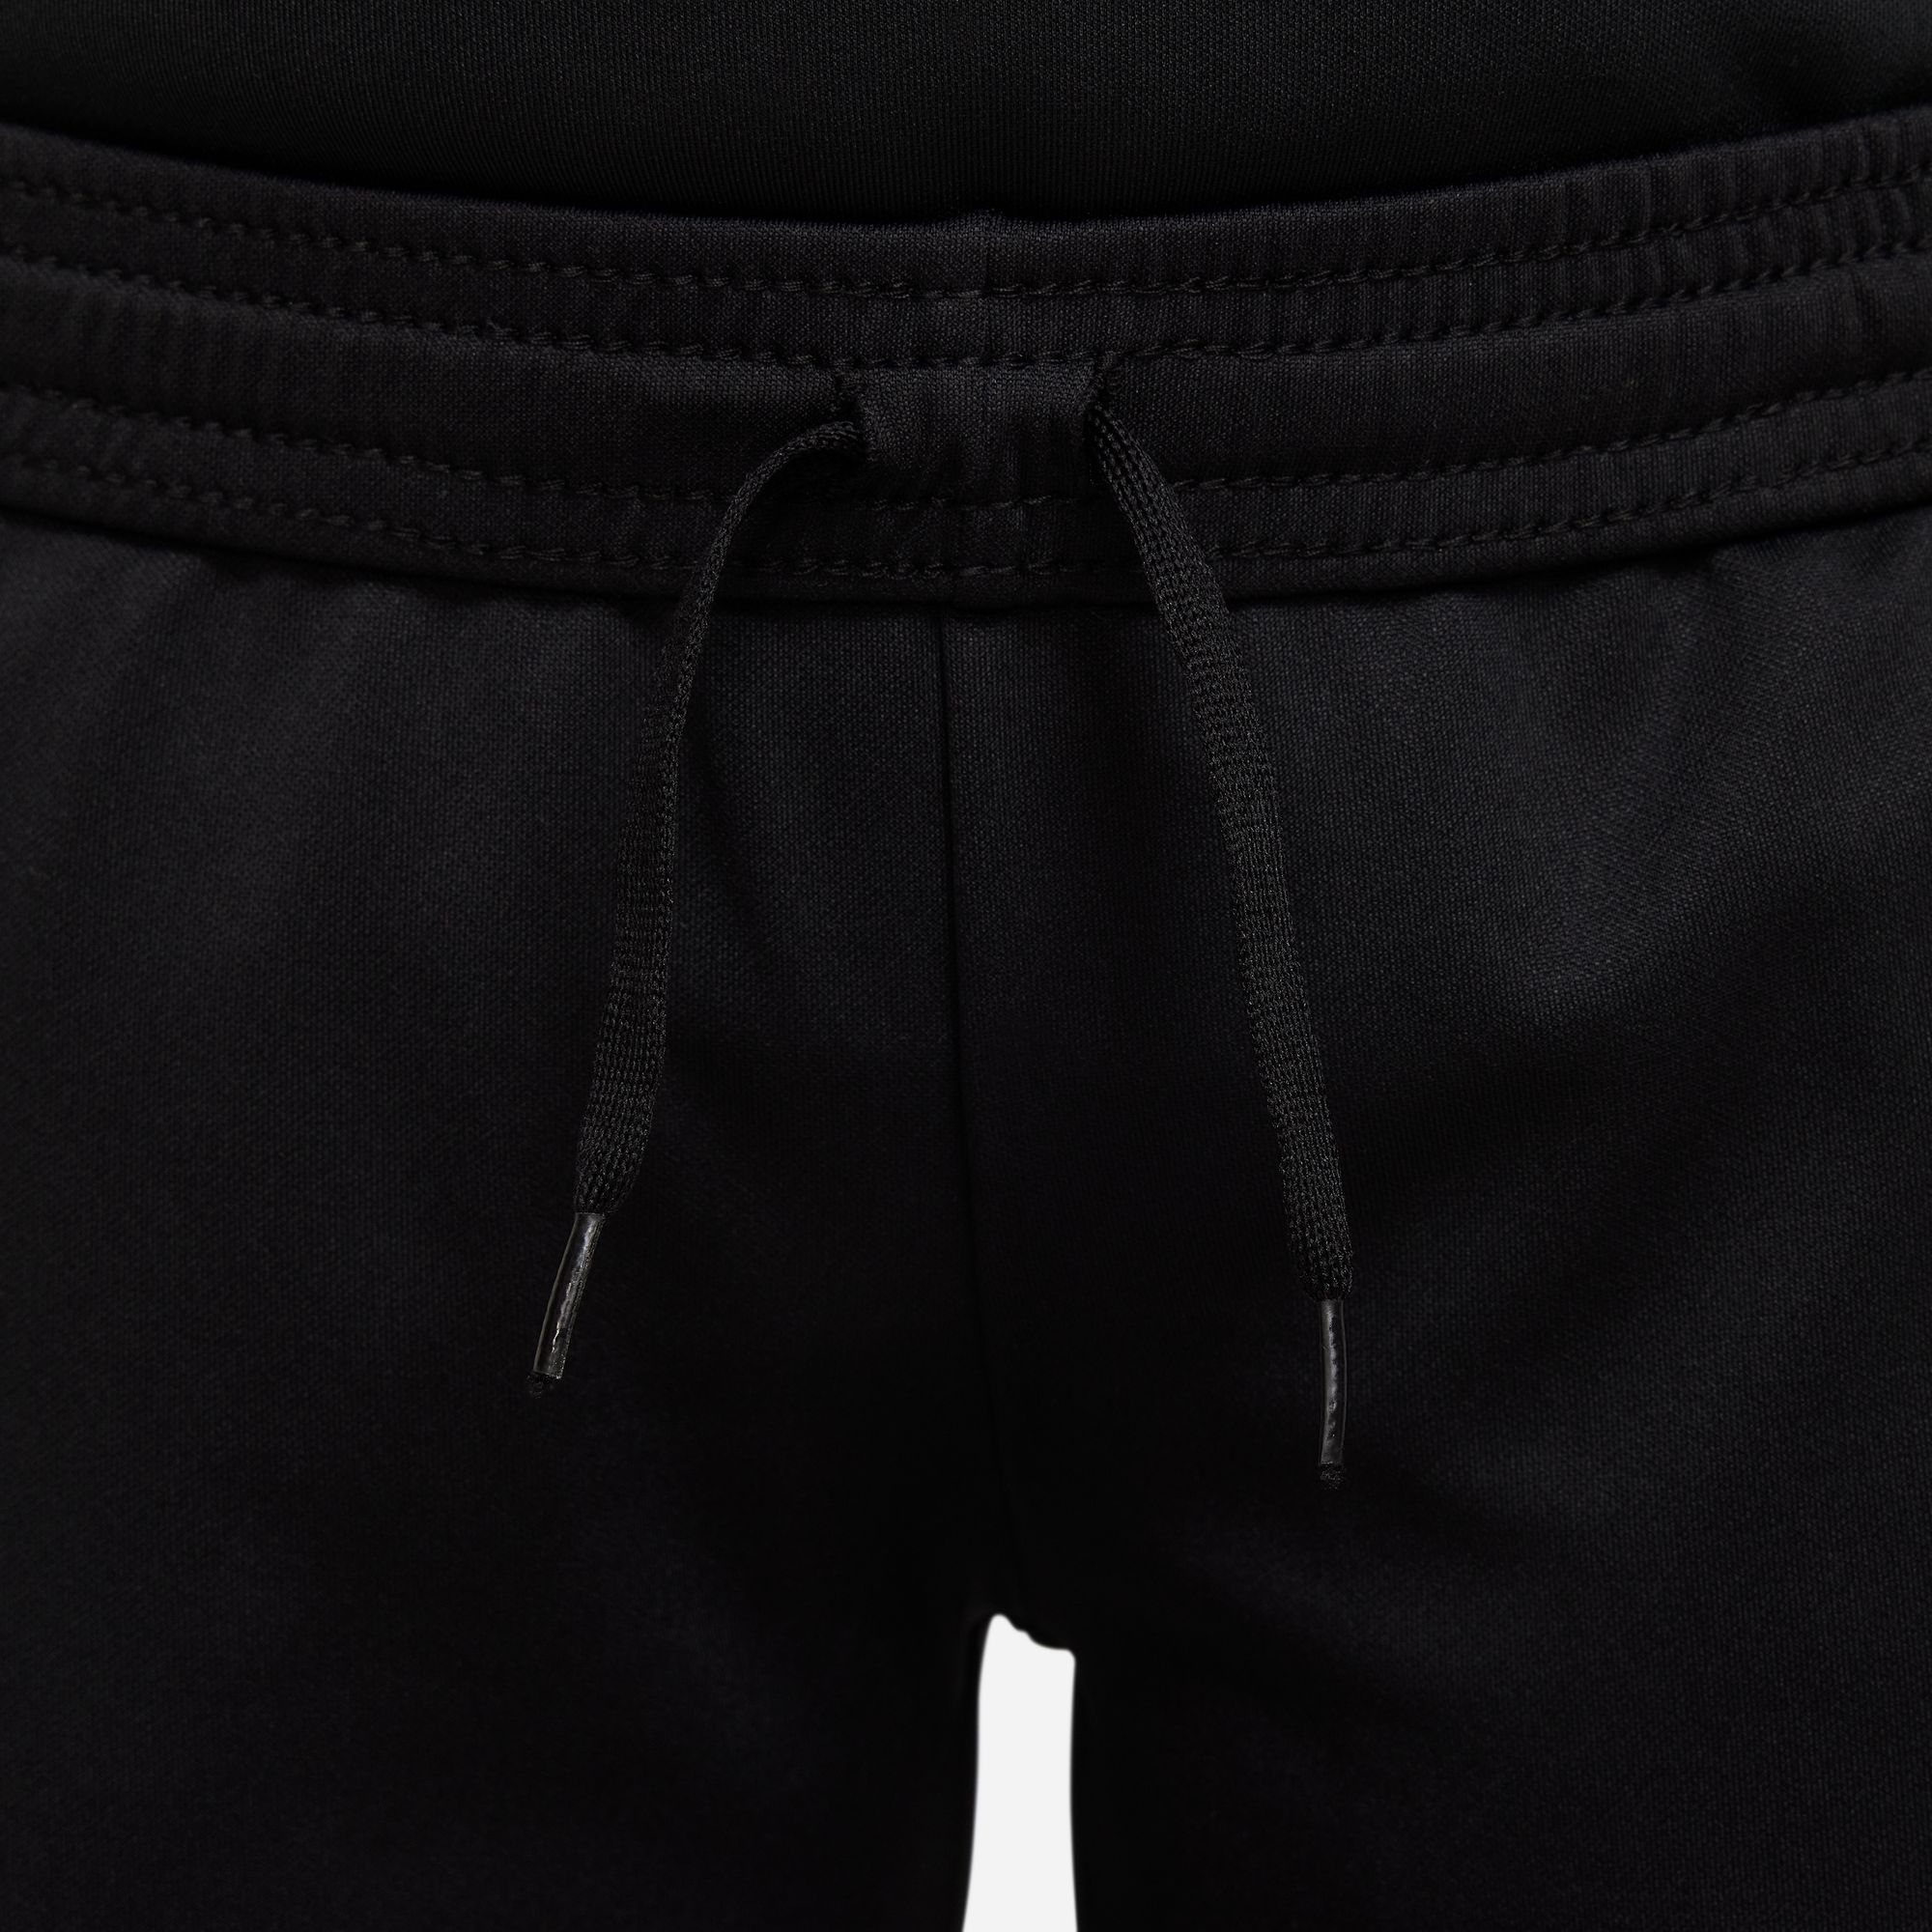 Stefans Soccer - Wisconsin - Nike Dri-FIT Academy Men's Soccer Pants - Black